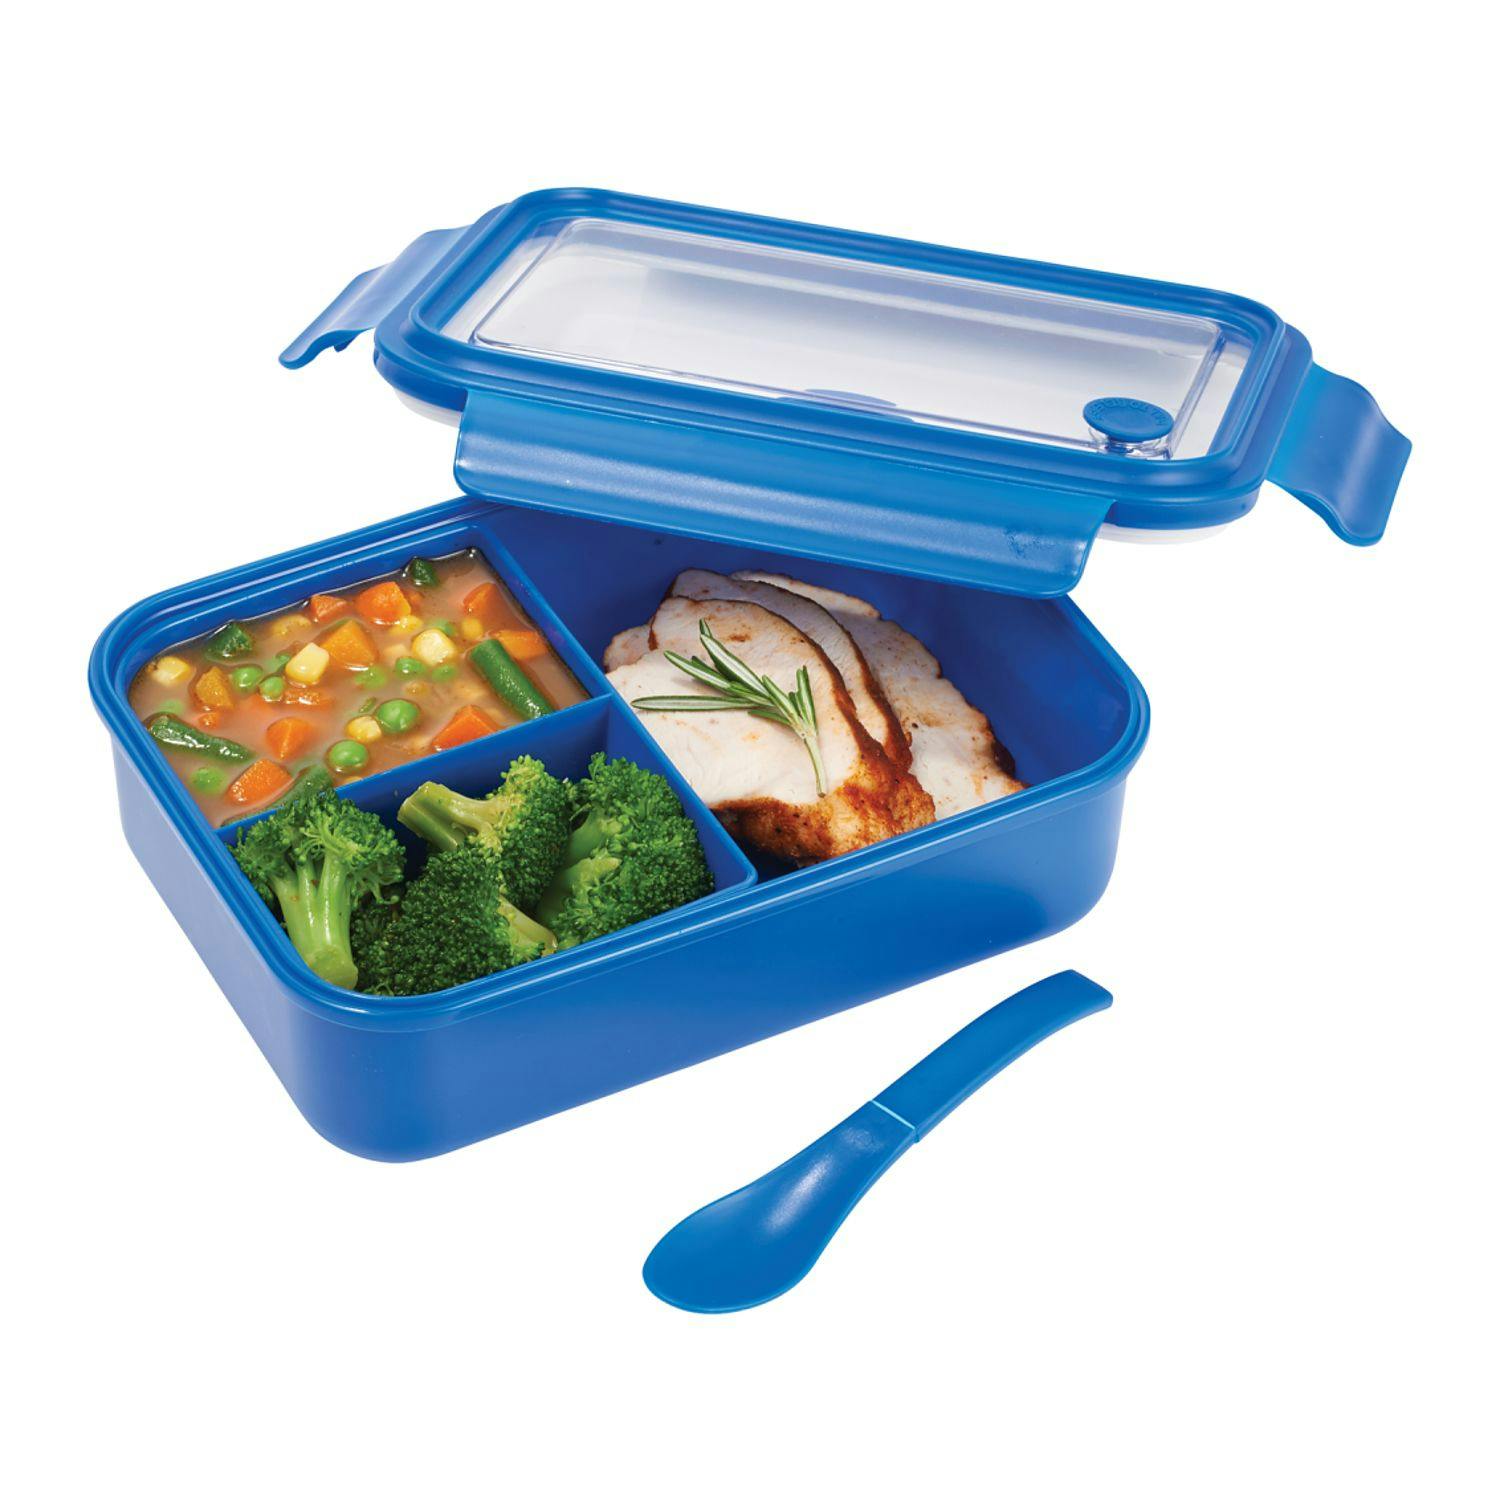 Three Compartment Food Storage Bento Box - additional Image 3